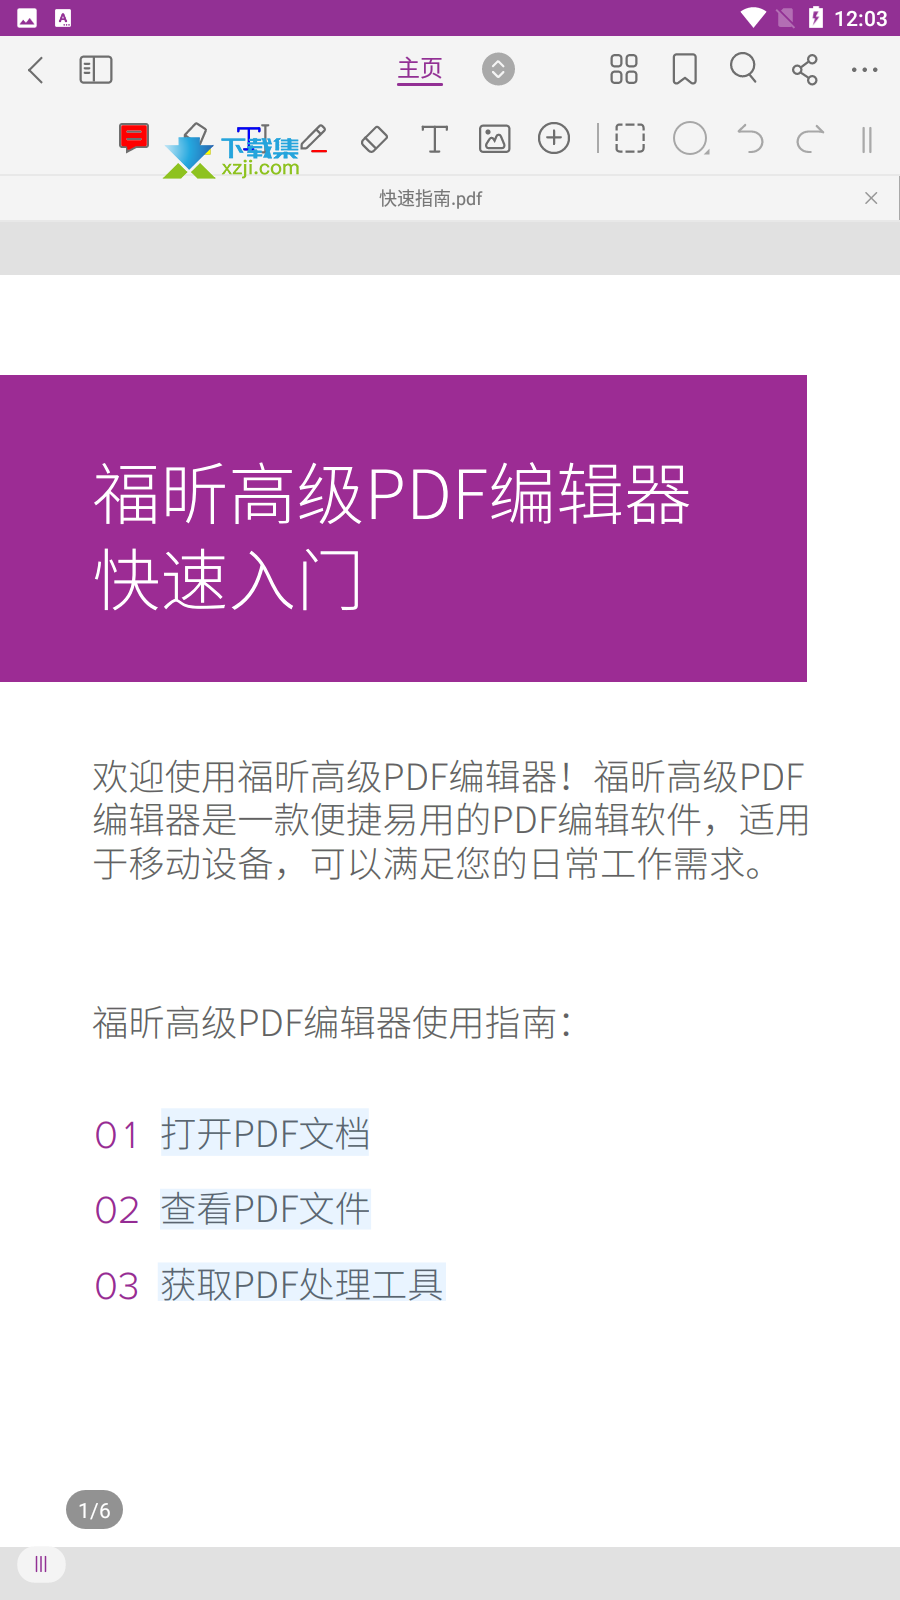 Foxit PDF Editor界面1